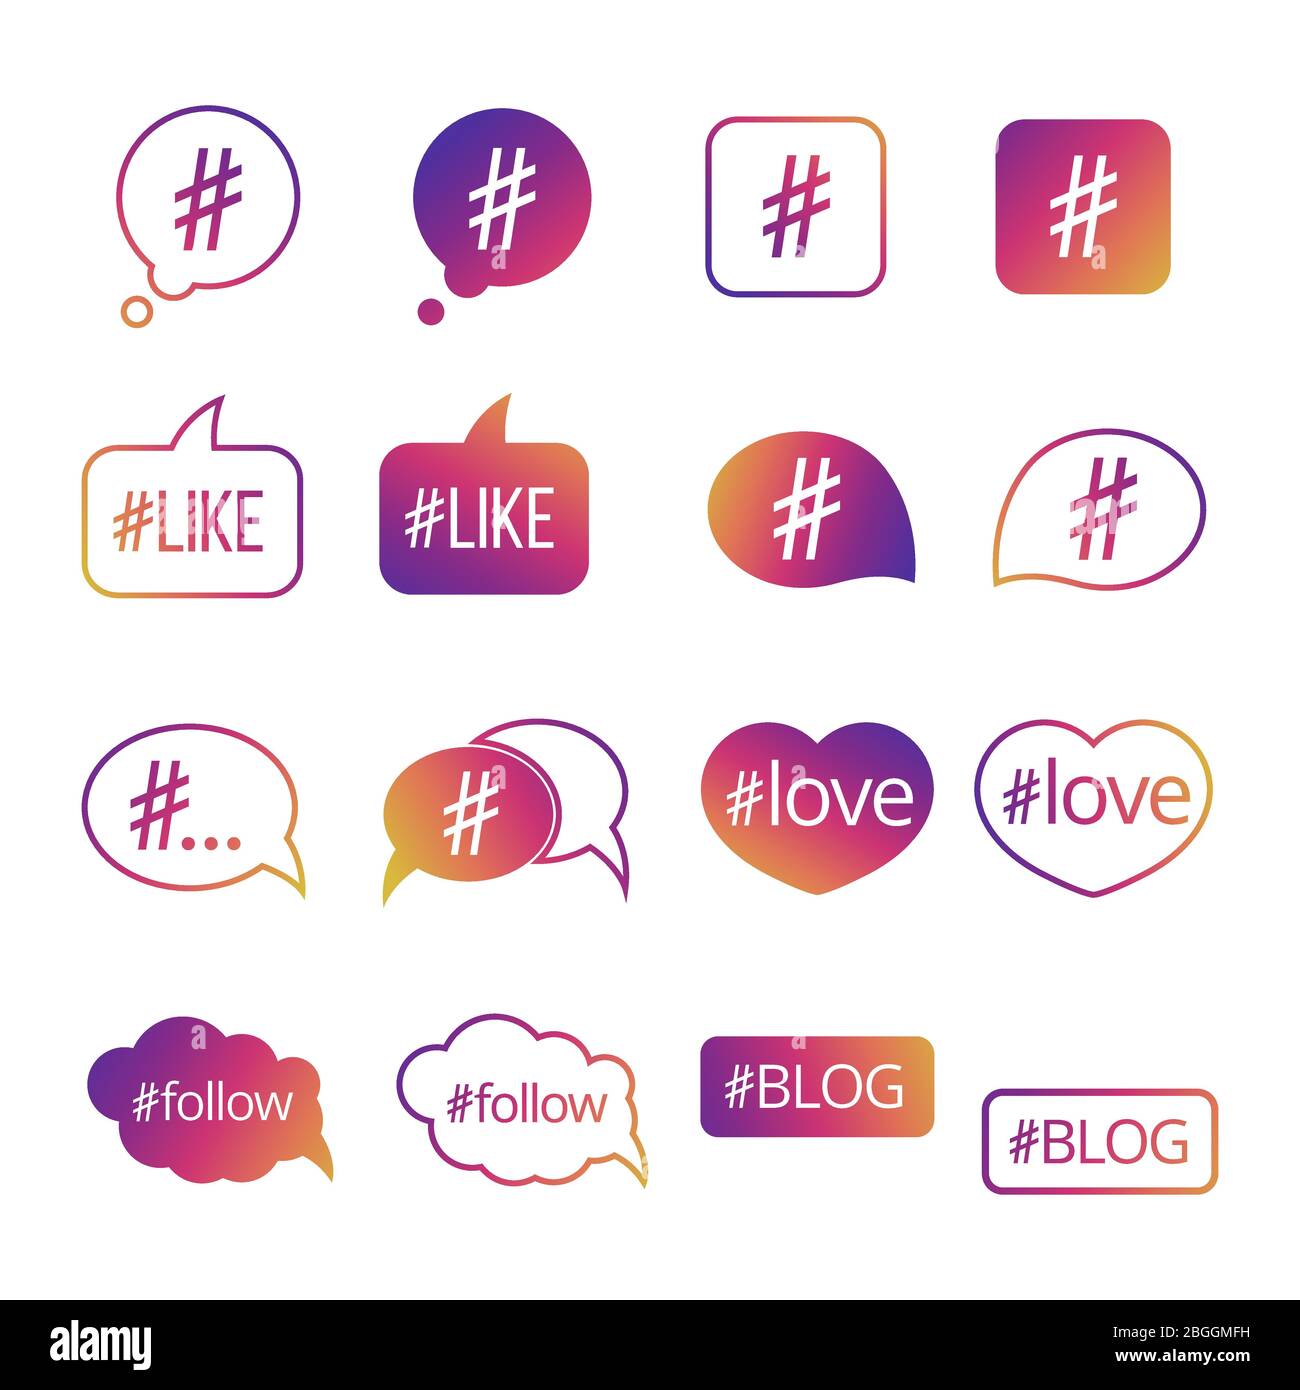 Bunte Hashtag Post Social Media Vektor-Icons isoliert auf weißem Hintergrund Illustration Stock Vektor